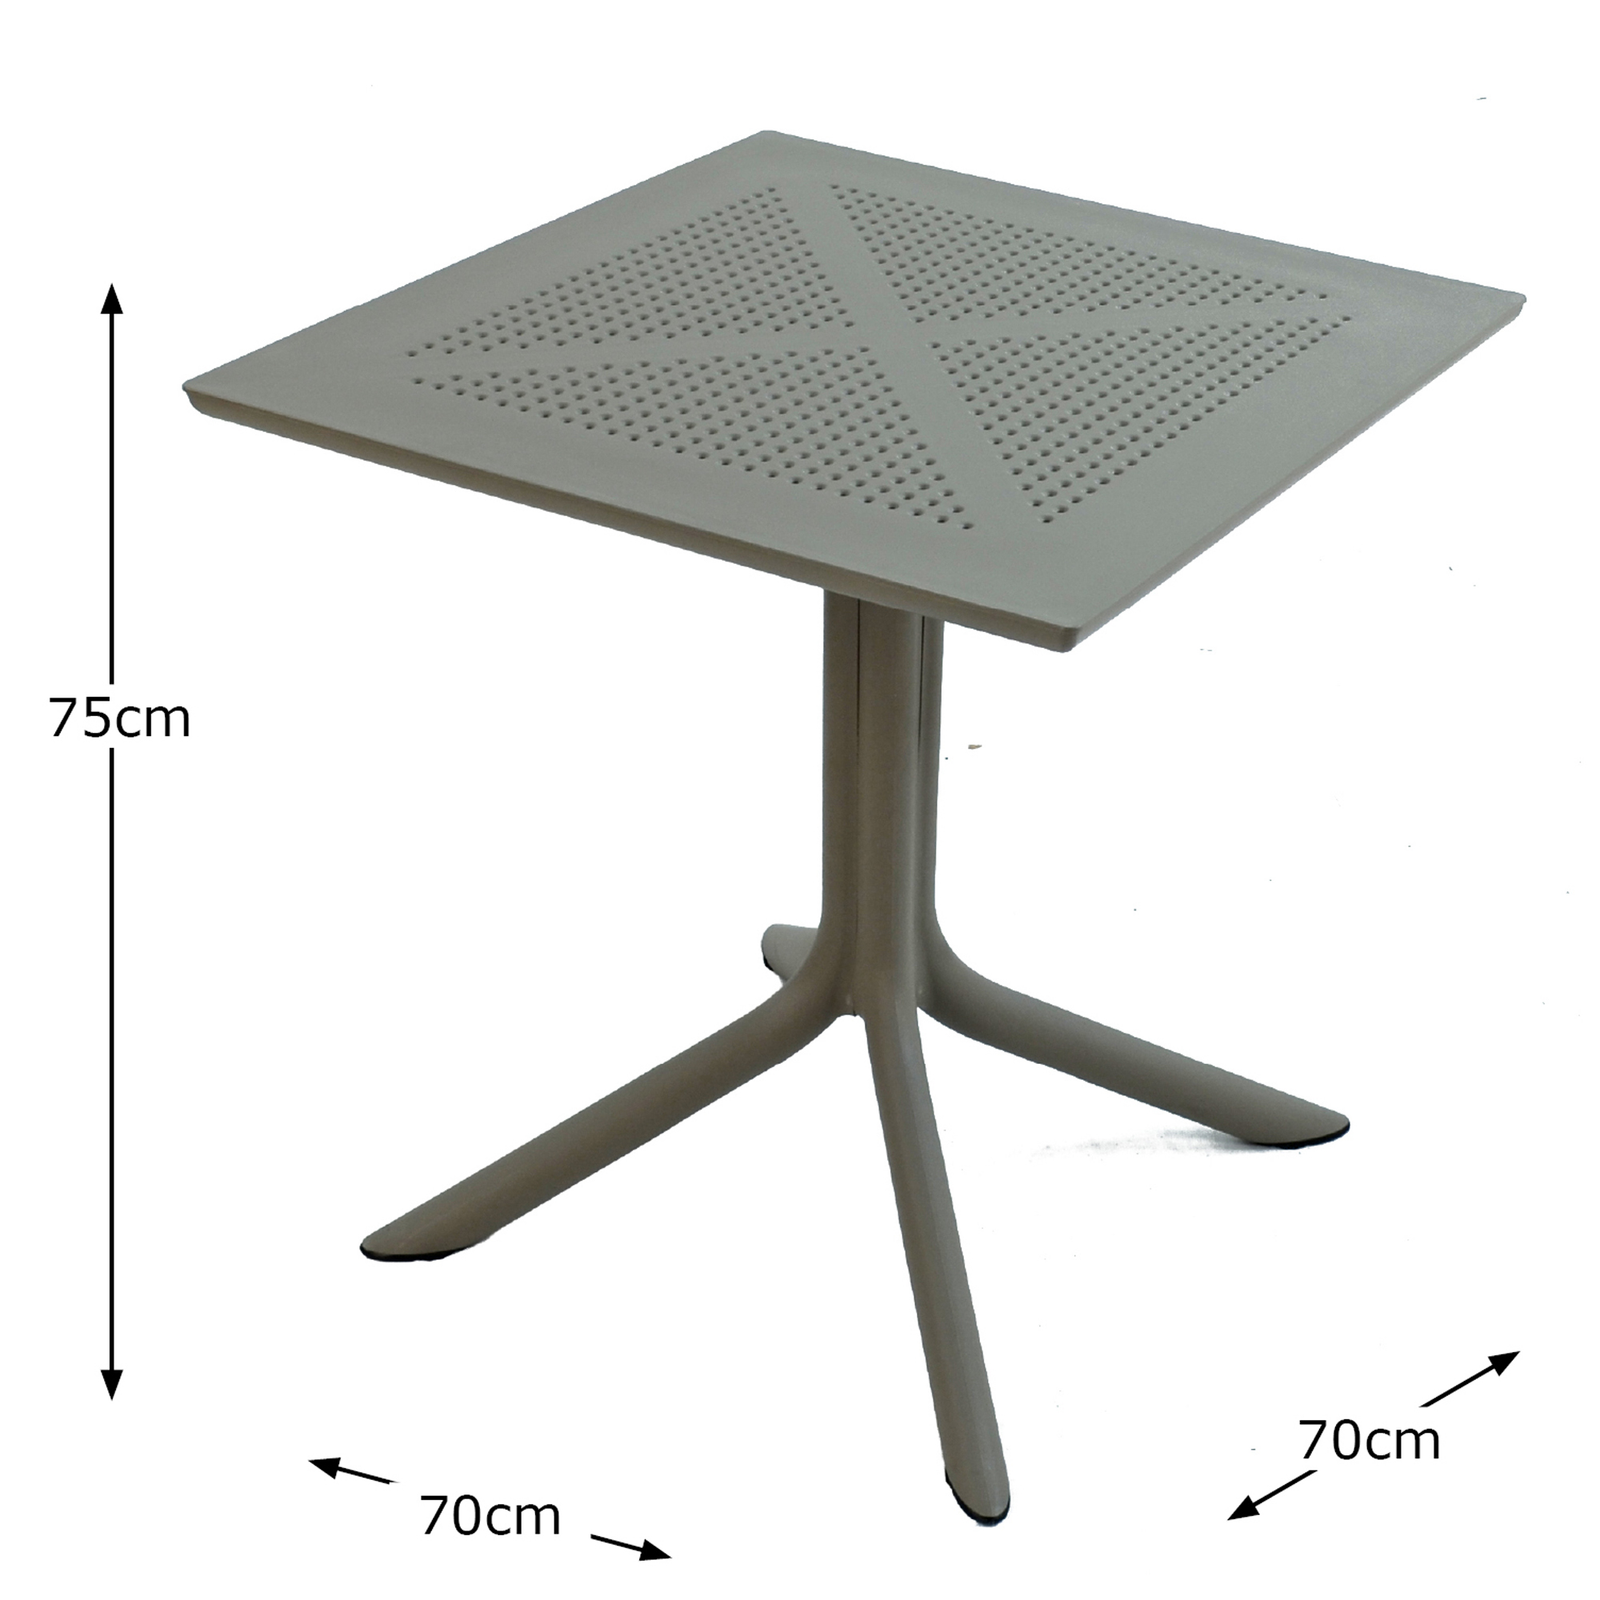 Nardi Clip 70cm Garden Resin Table in Turtle Dove Grey Tables Nardi Default Title  